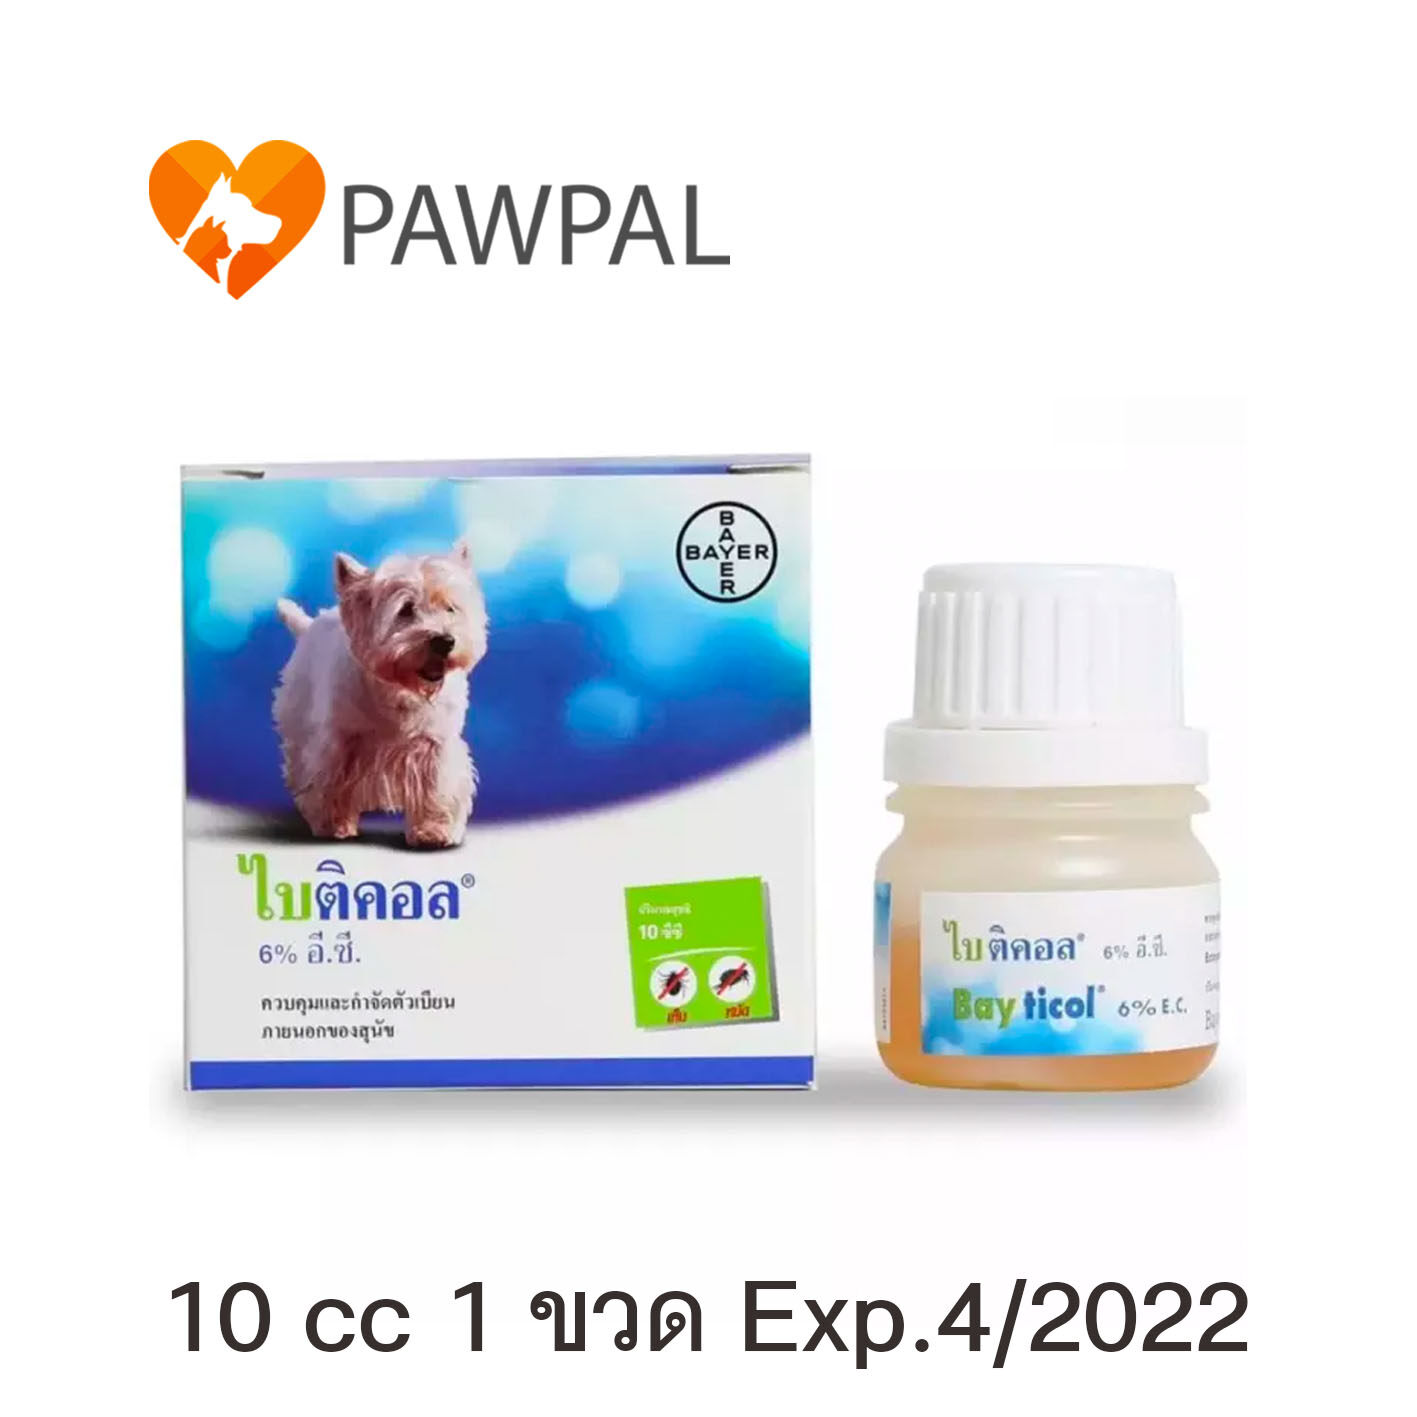 Bayticol 6% E.C. 10 cc ไบติคอล 6% อี.ซี. Bayer Exp.4/2022 น้ำยาควบคุม กำจัดเห็บหมัด สำหรับ สุนัข ใช้ภายนอก 10 ml tick flea control for dog (1 ขวด)